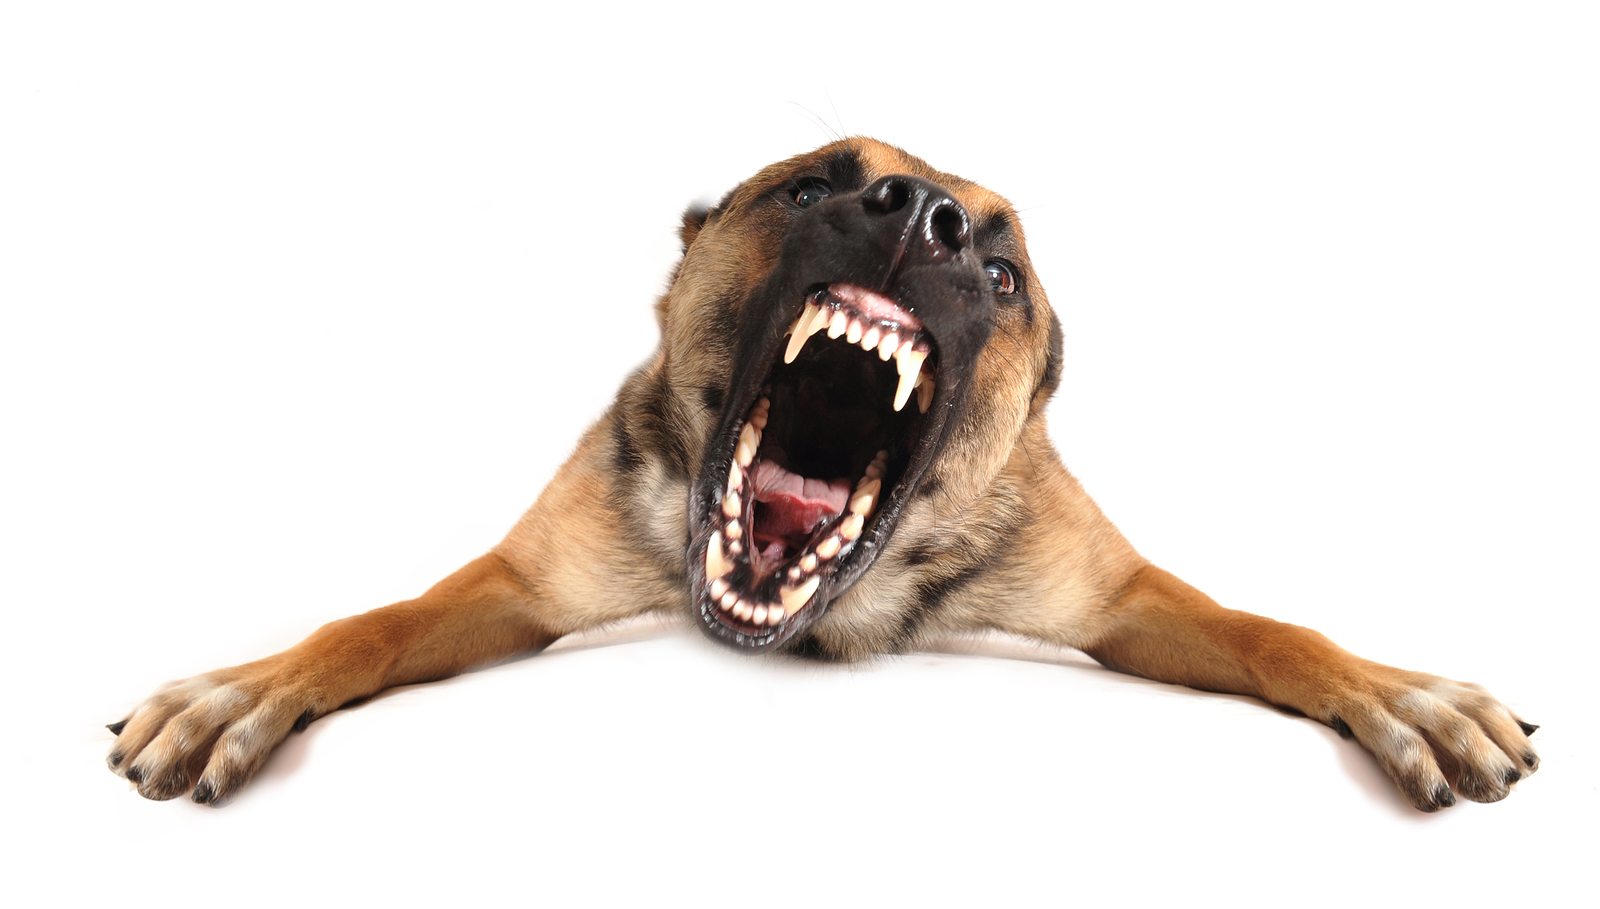 https://www.funpawcare.com/wp-content/uploads/2015/06/Agressive-Dog-Biting.jpg